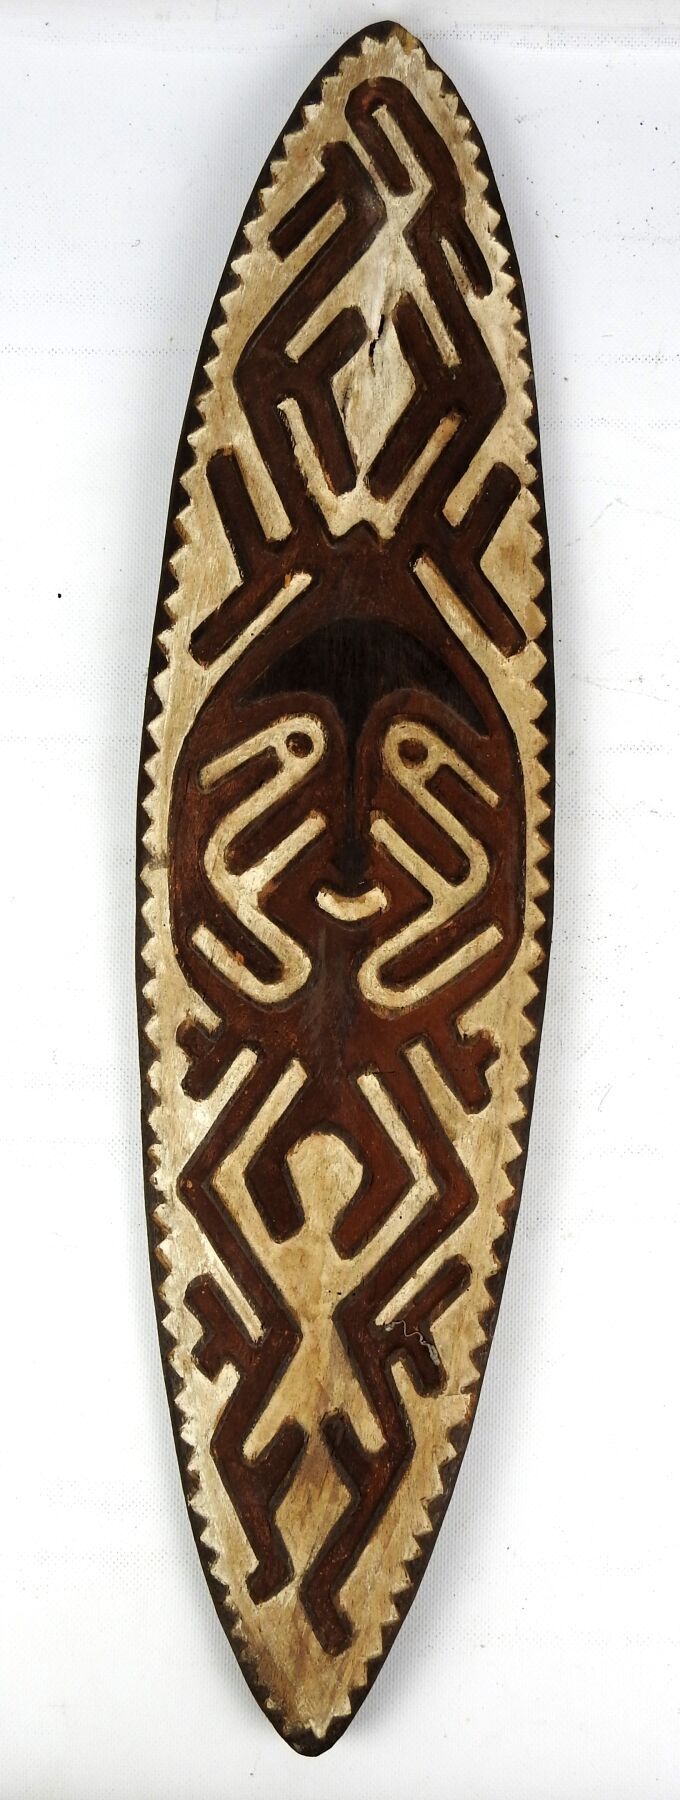 Null Gope "投票板，巴布亚新几内亚的GULF of PAPUA。
木材，多色颜料
高度：70厘米。宽度：17厘米。
出处：私人收藏，布卢瓦。